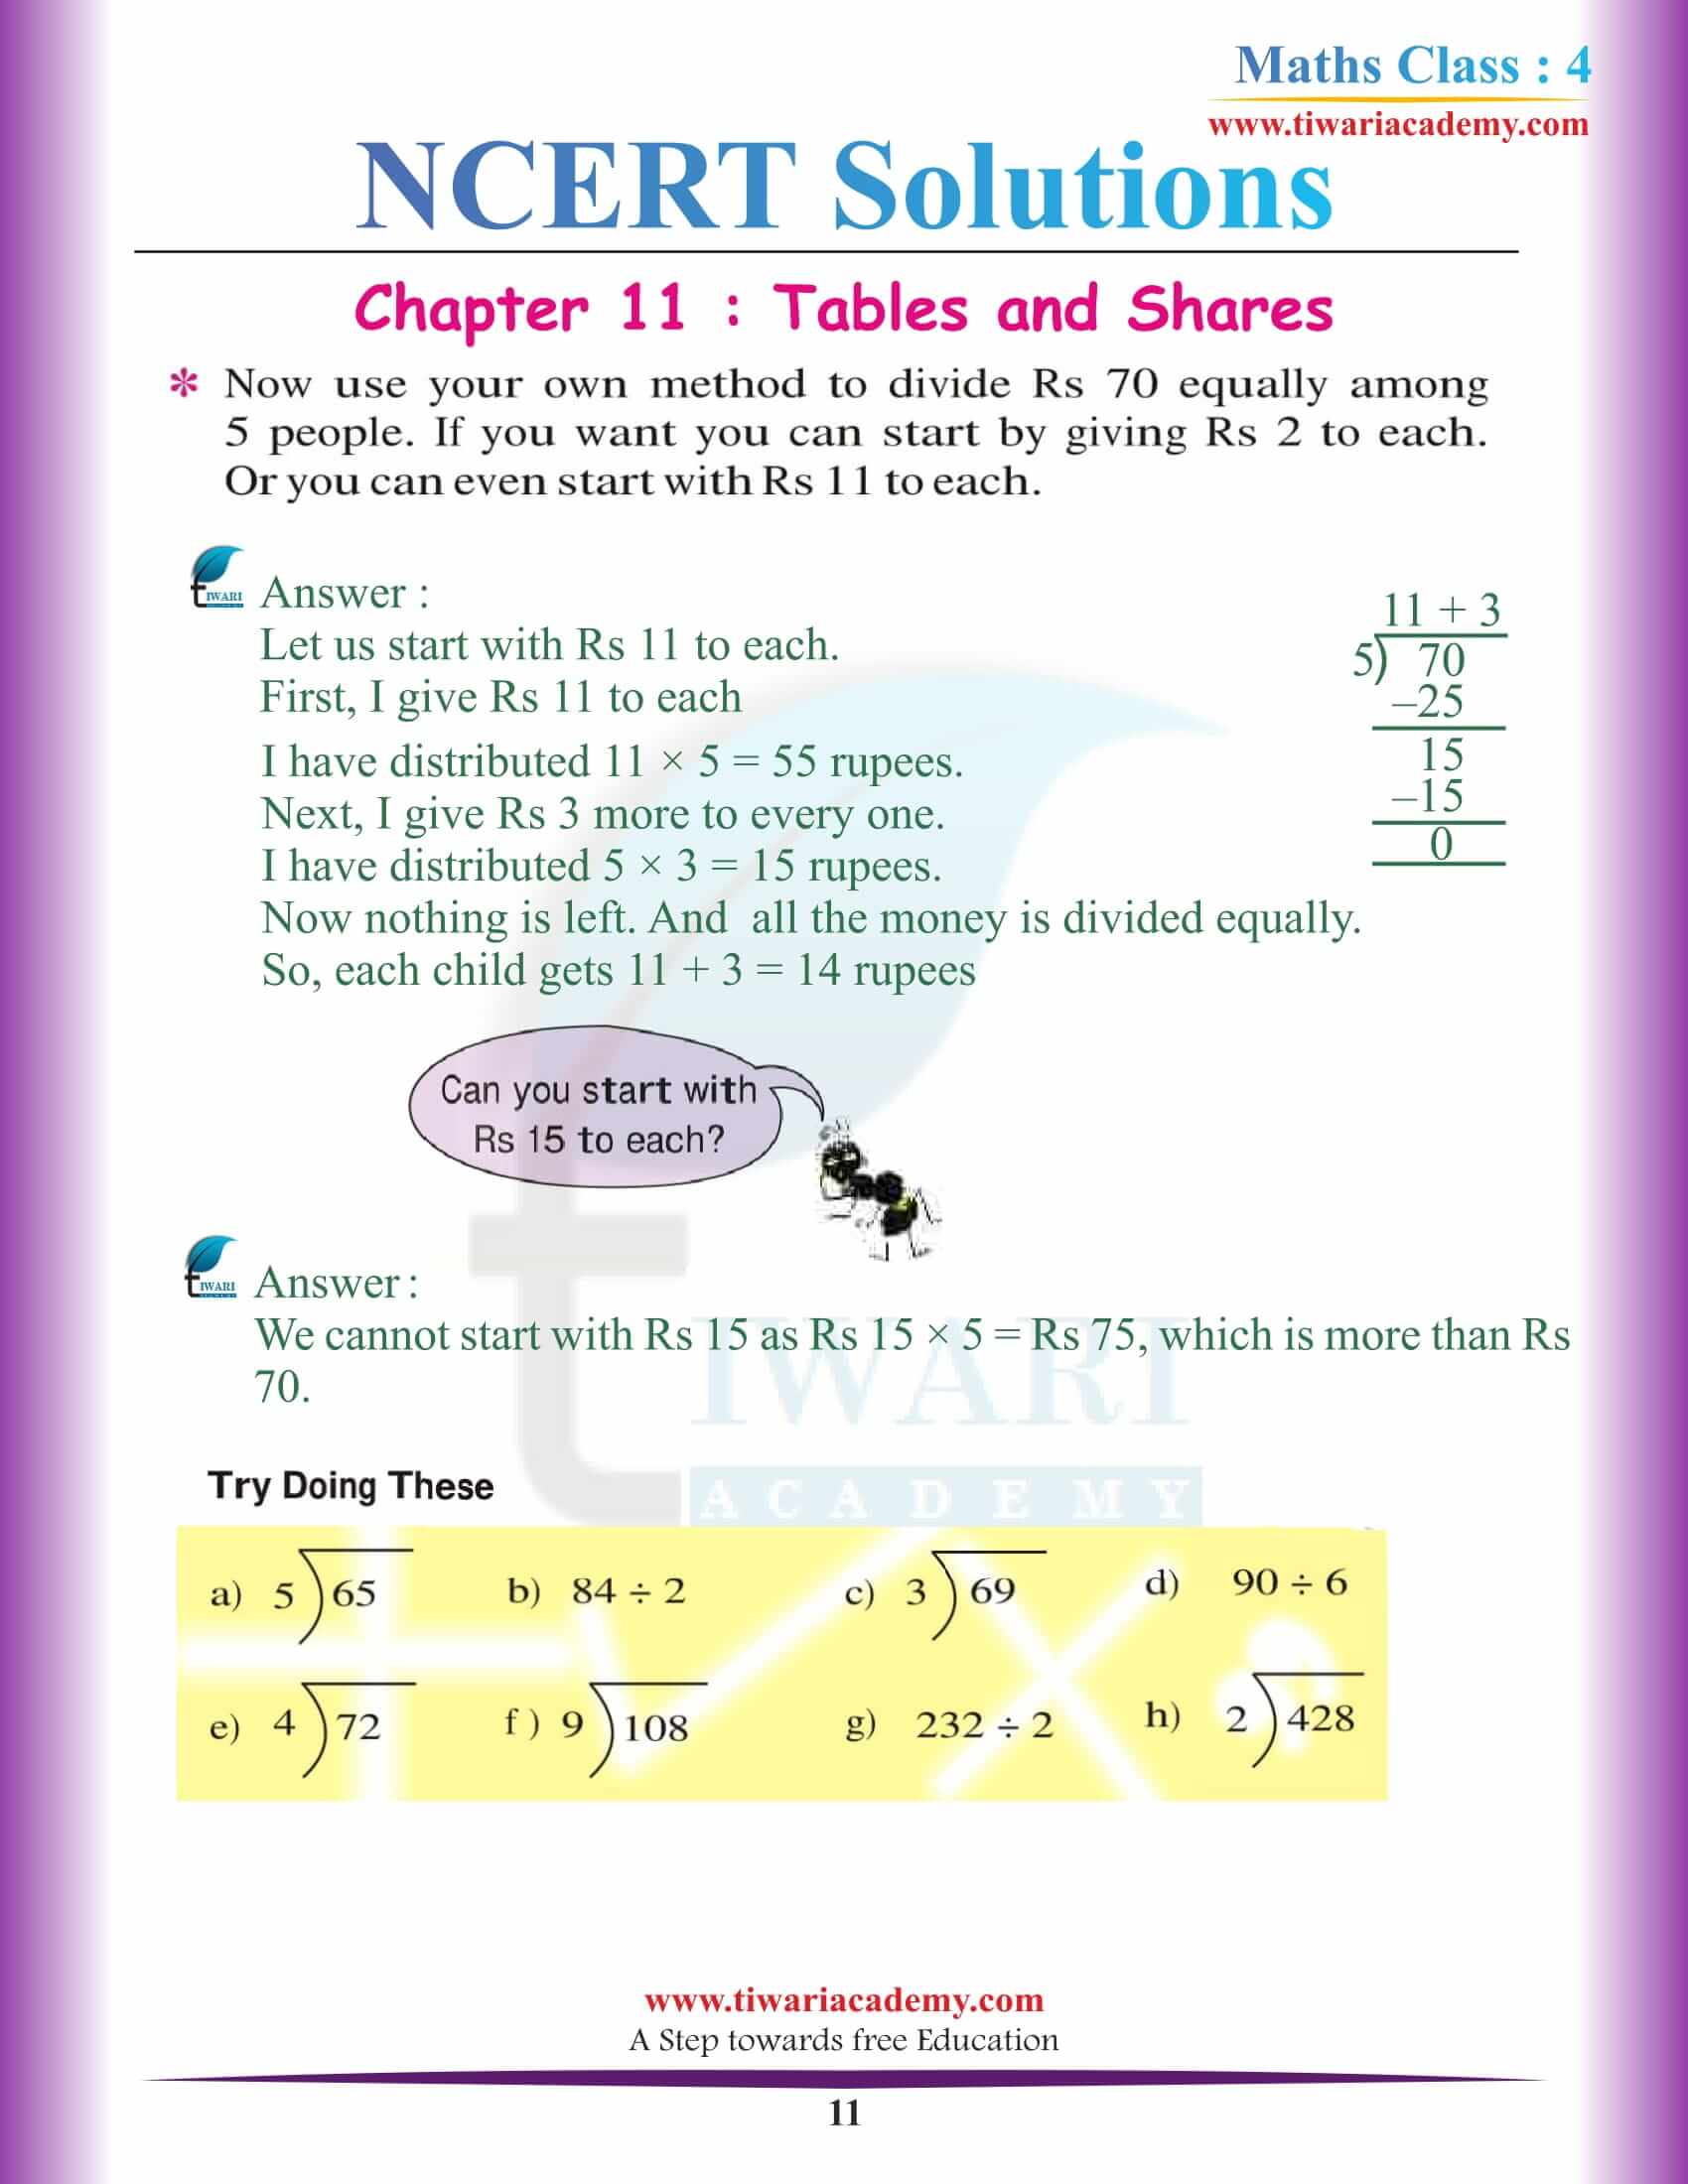 Class 4 Maths NCERT Chapter 11 Solutions pdf download